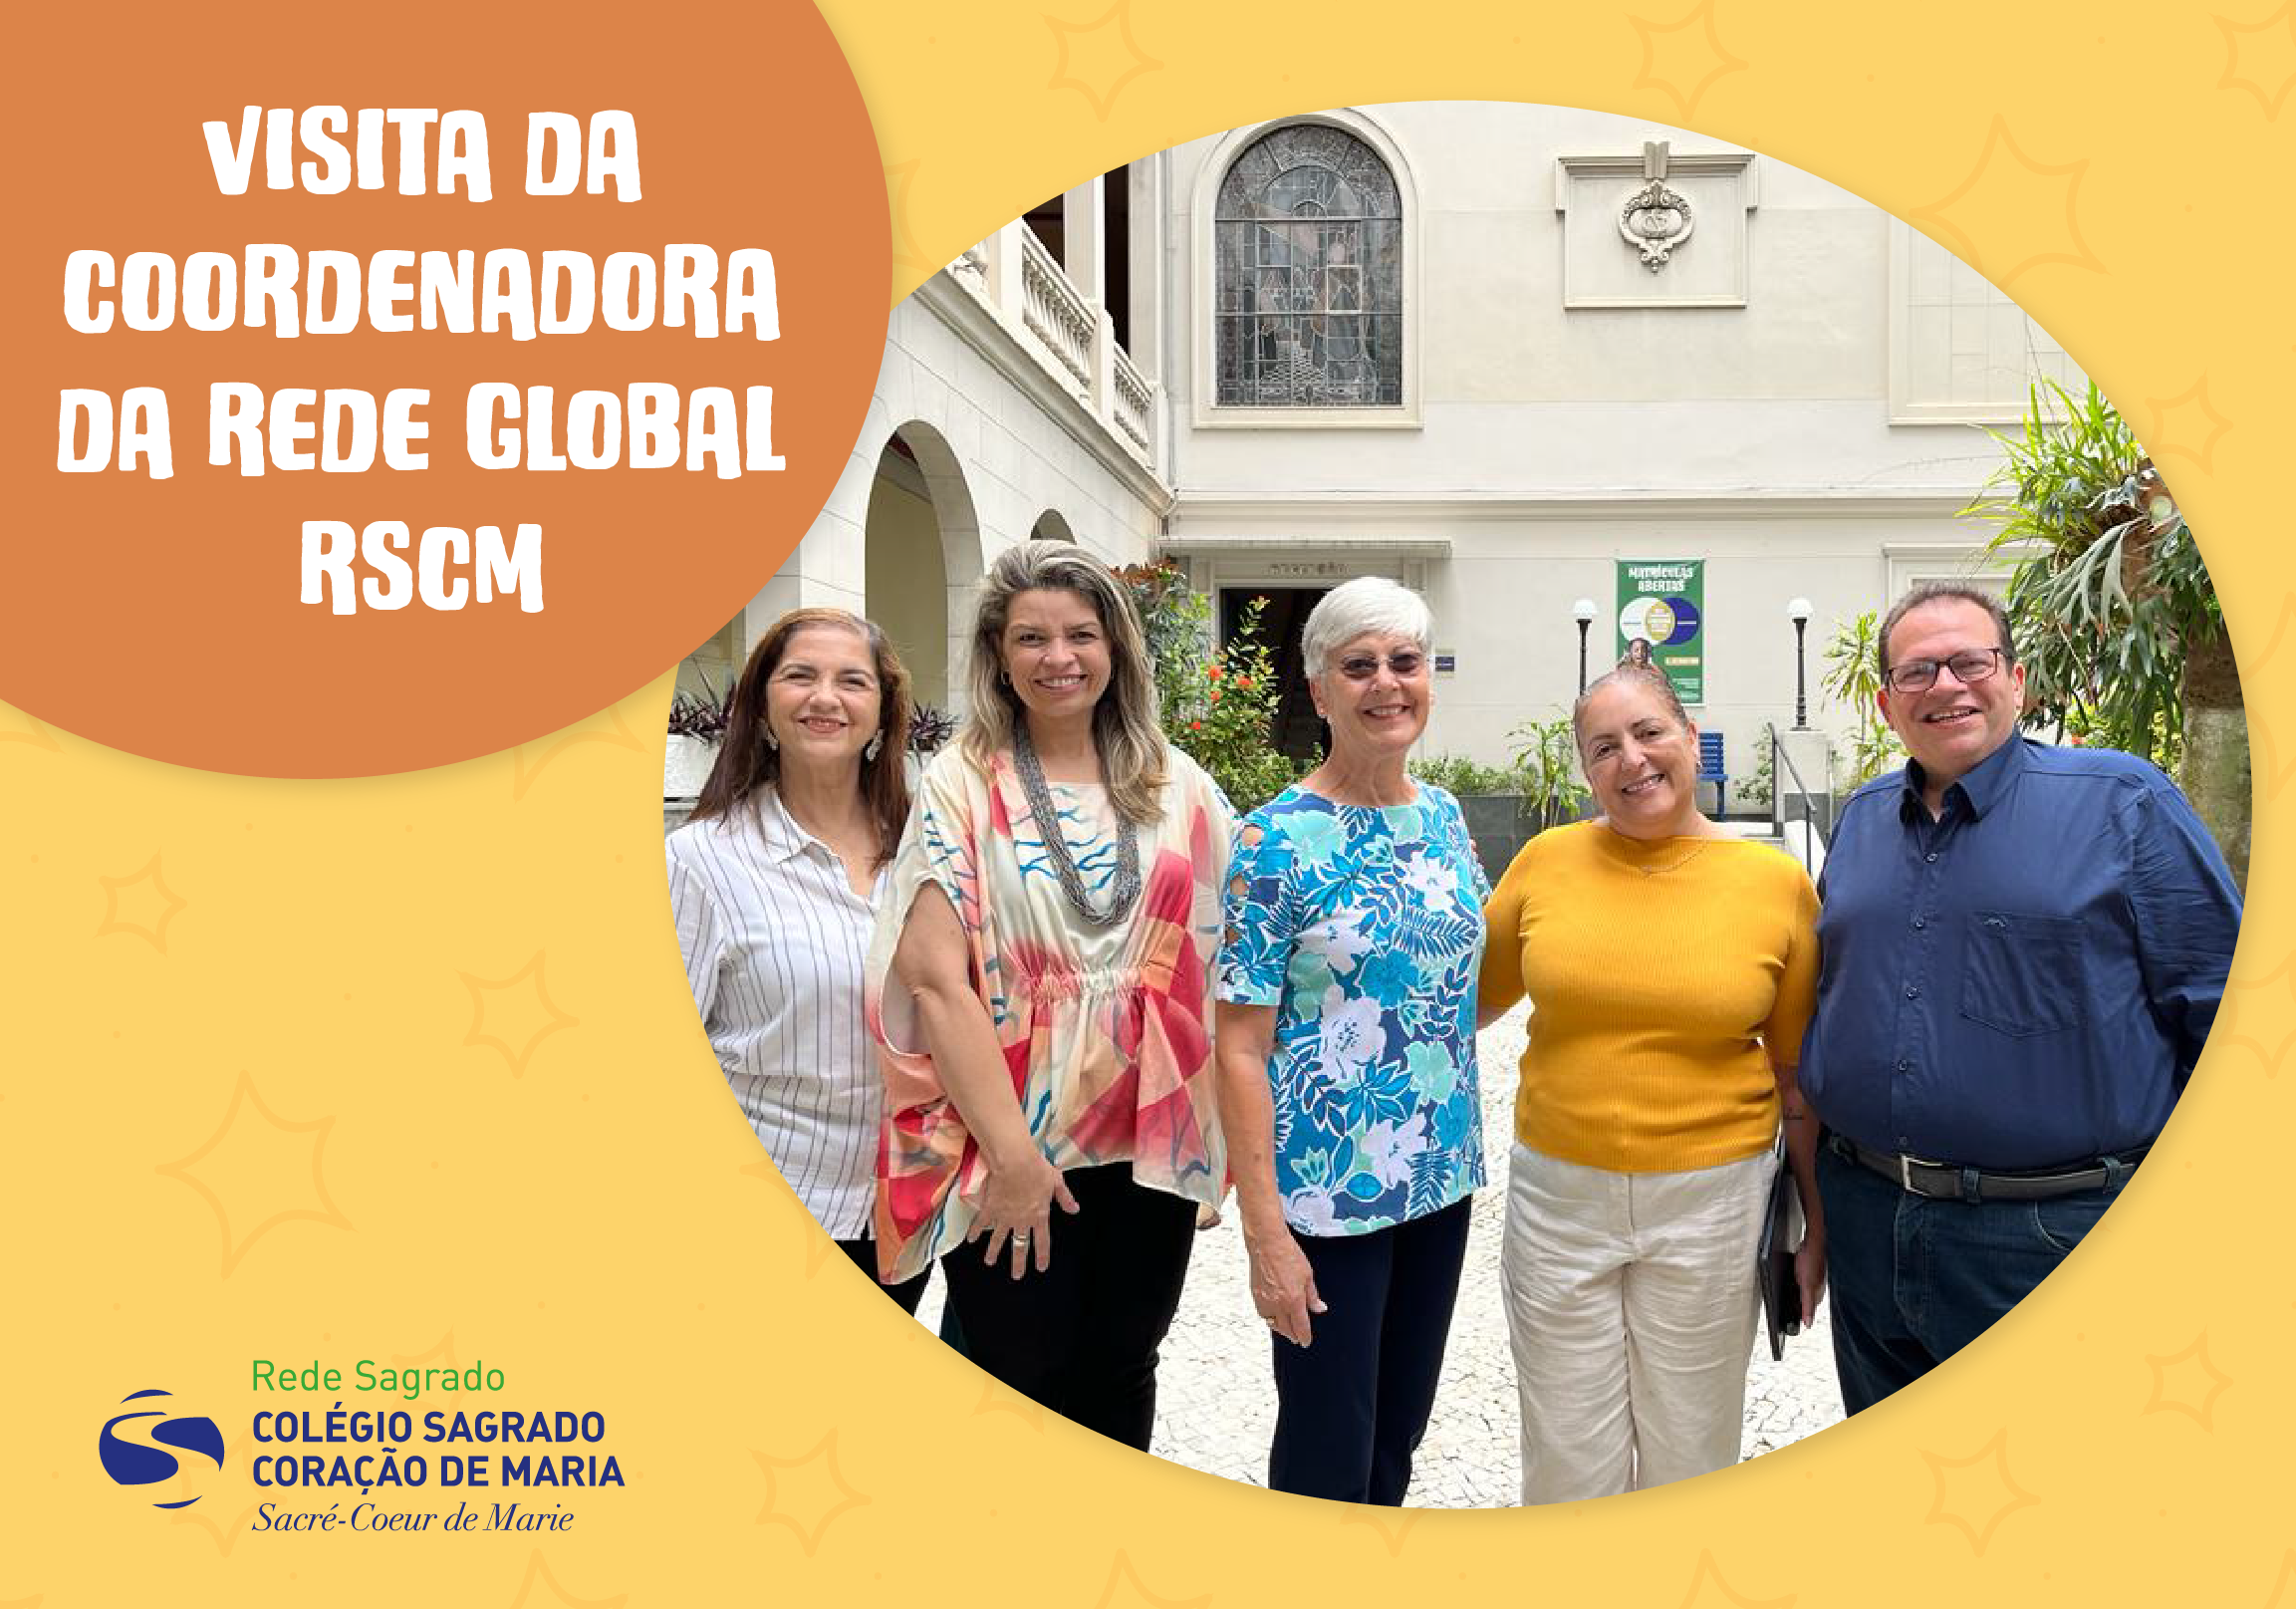 Coordenadora da Rede Global de Escolas RSCM visita Unidade do Rio de Janeiro